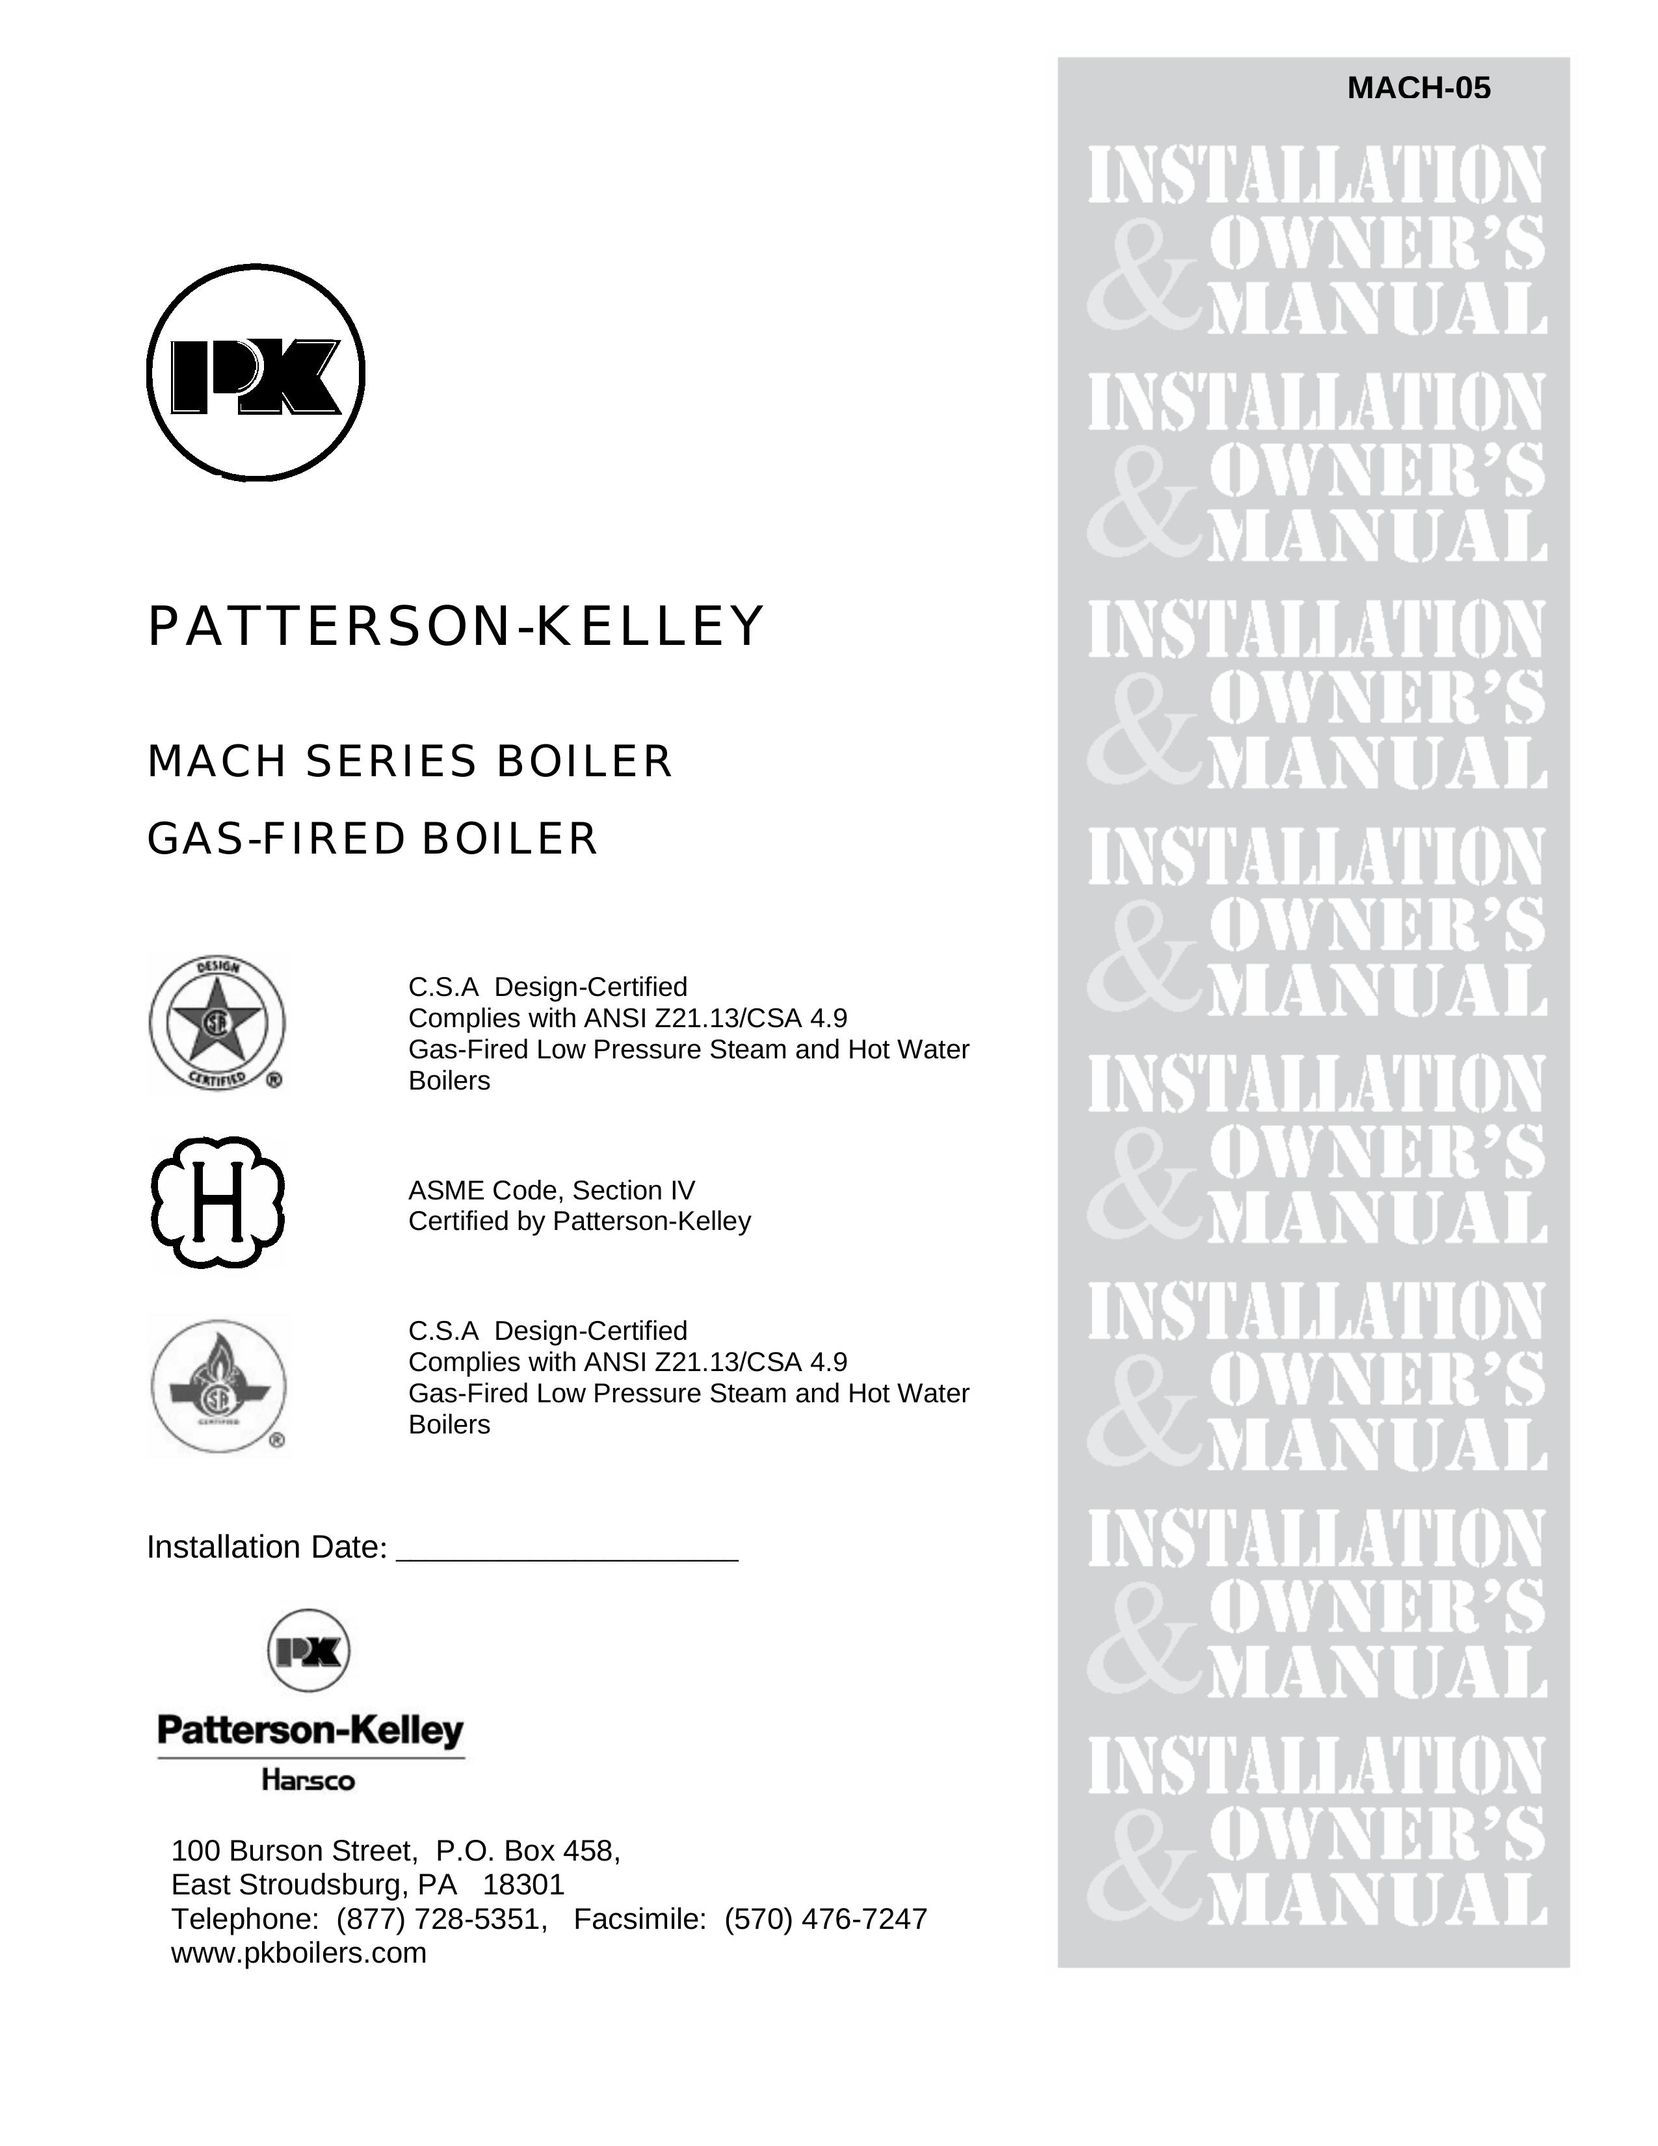 Patterson-Kelley MACH-05 Boiler User Manual